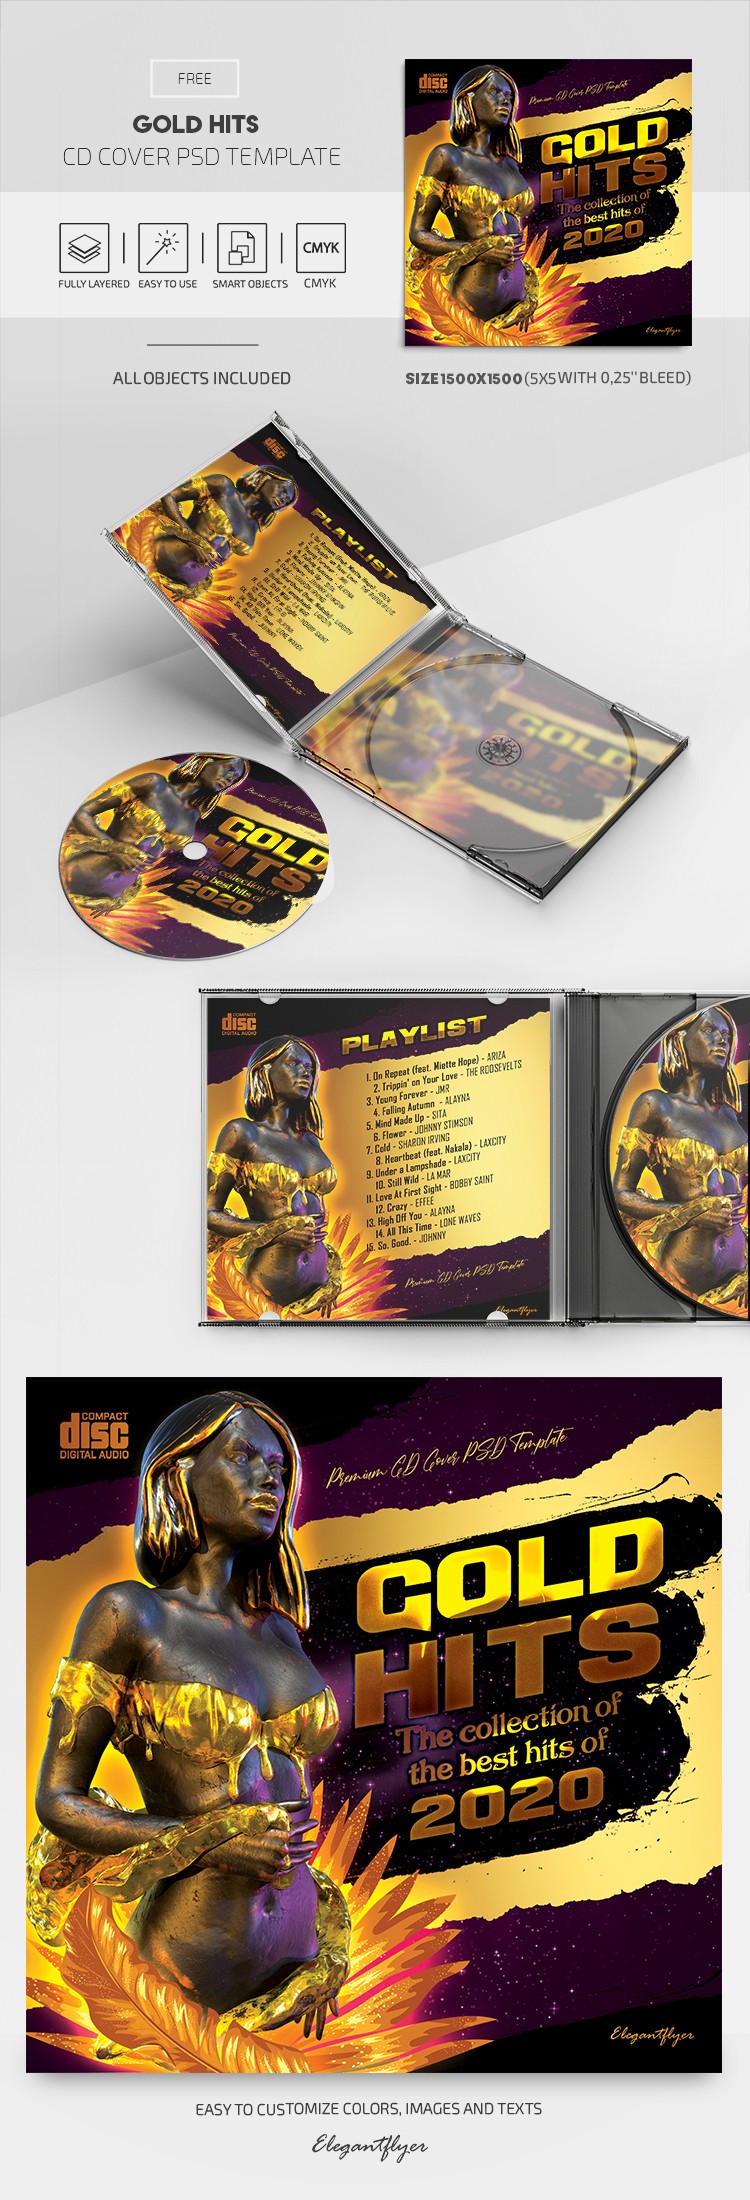 Capa do CD Gold Hits by ElegantFlyer